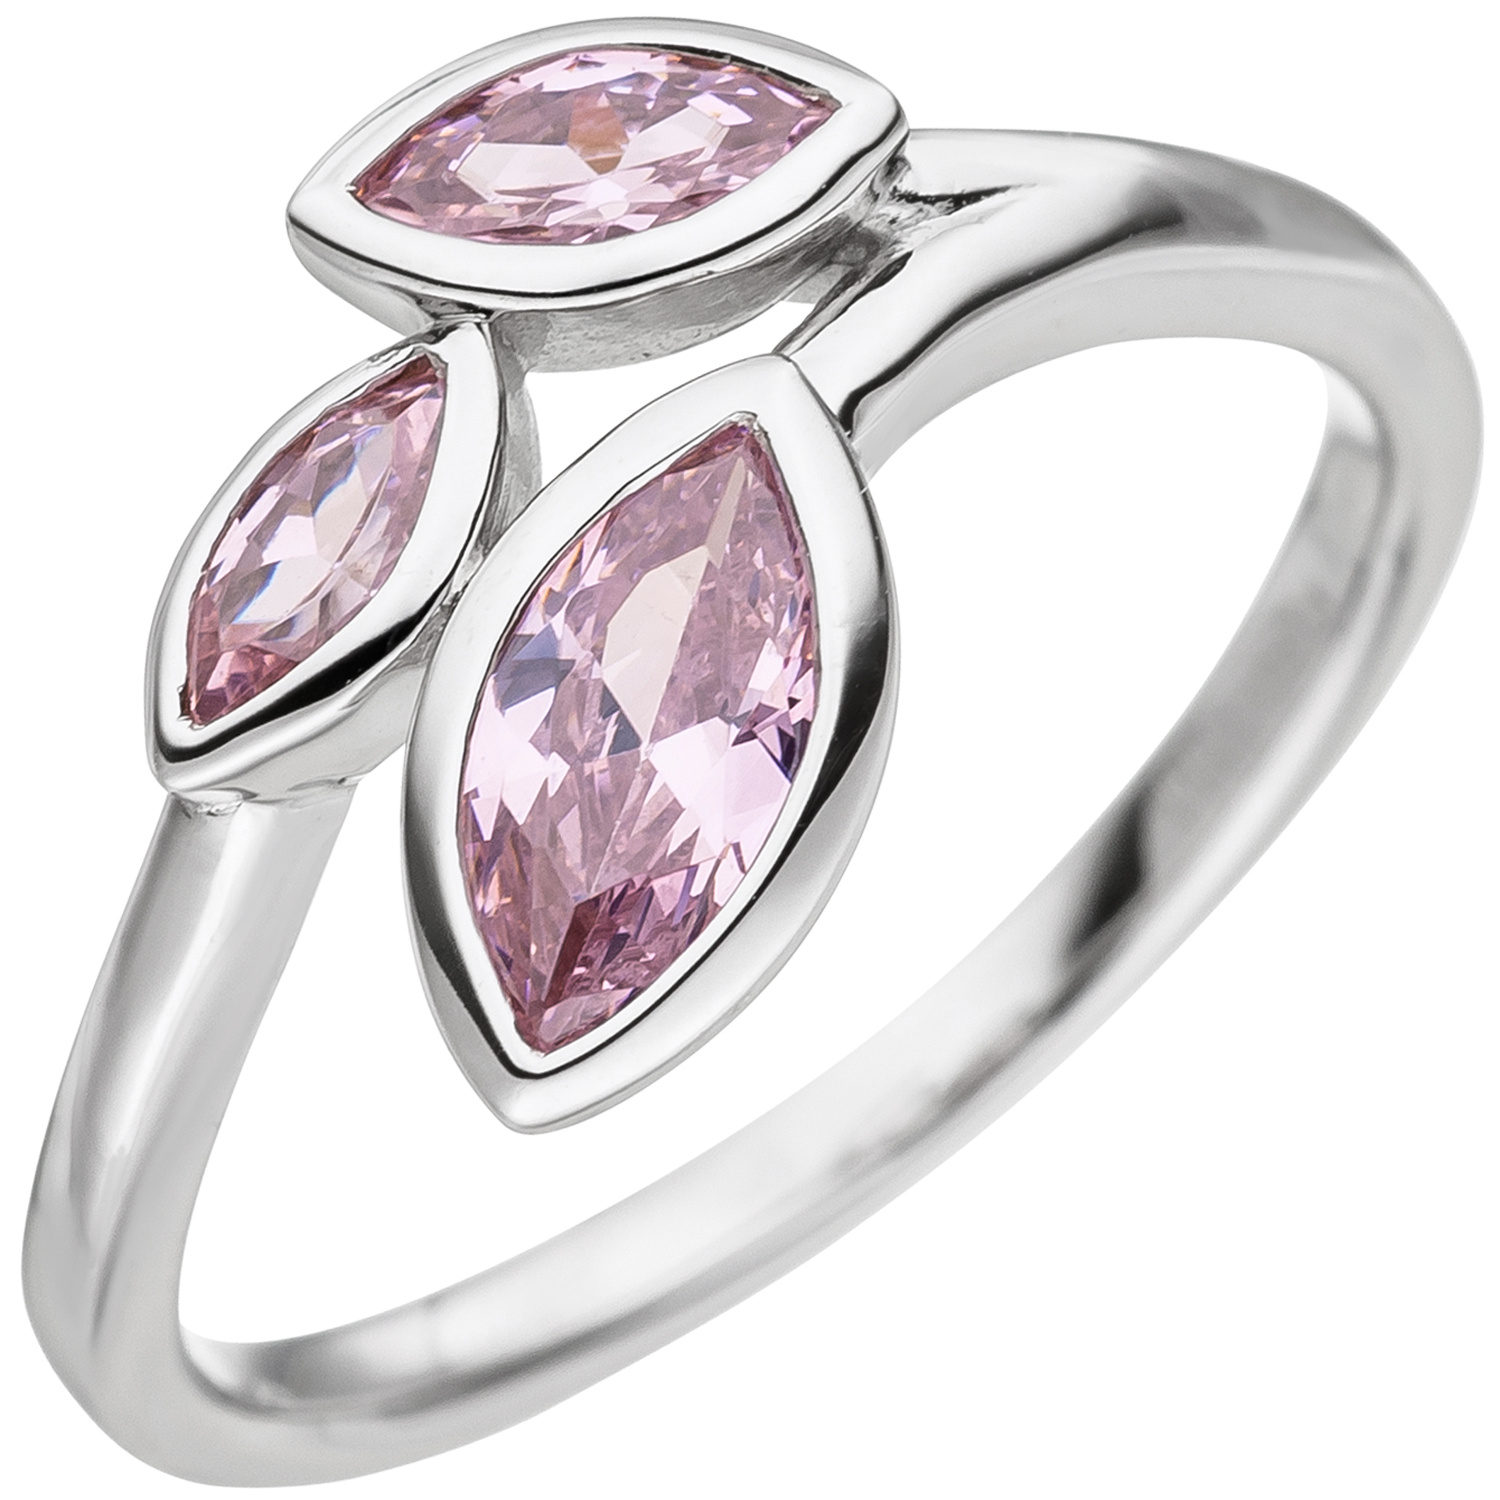 Ring aus Silber 925 Silberring Ring mit Zirkonia Fingerring Pink Ring rosa Schmuck rosa Stein Gr\u00f6\u00dfe 17,5 Ringe Silberringe 